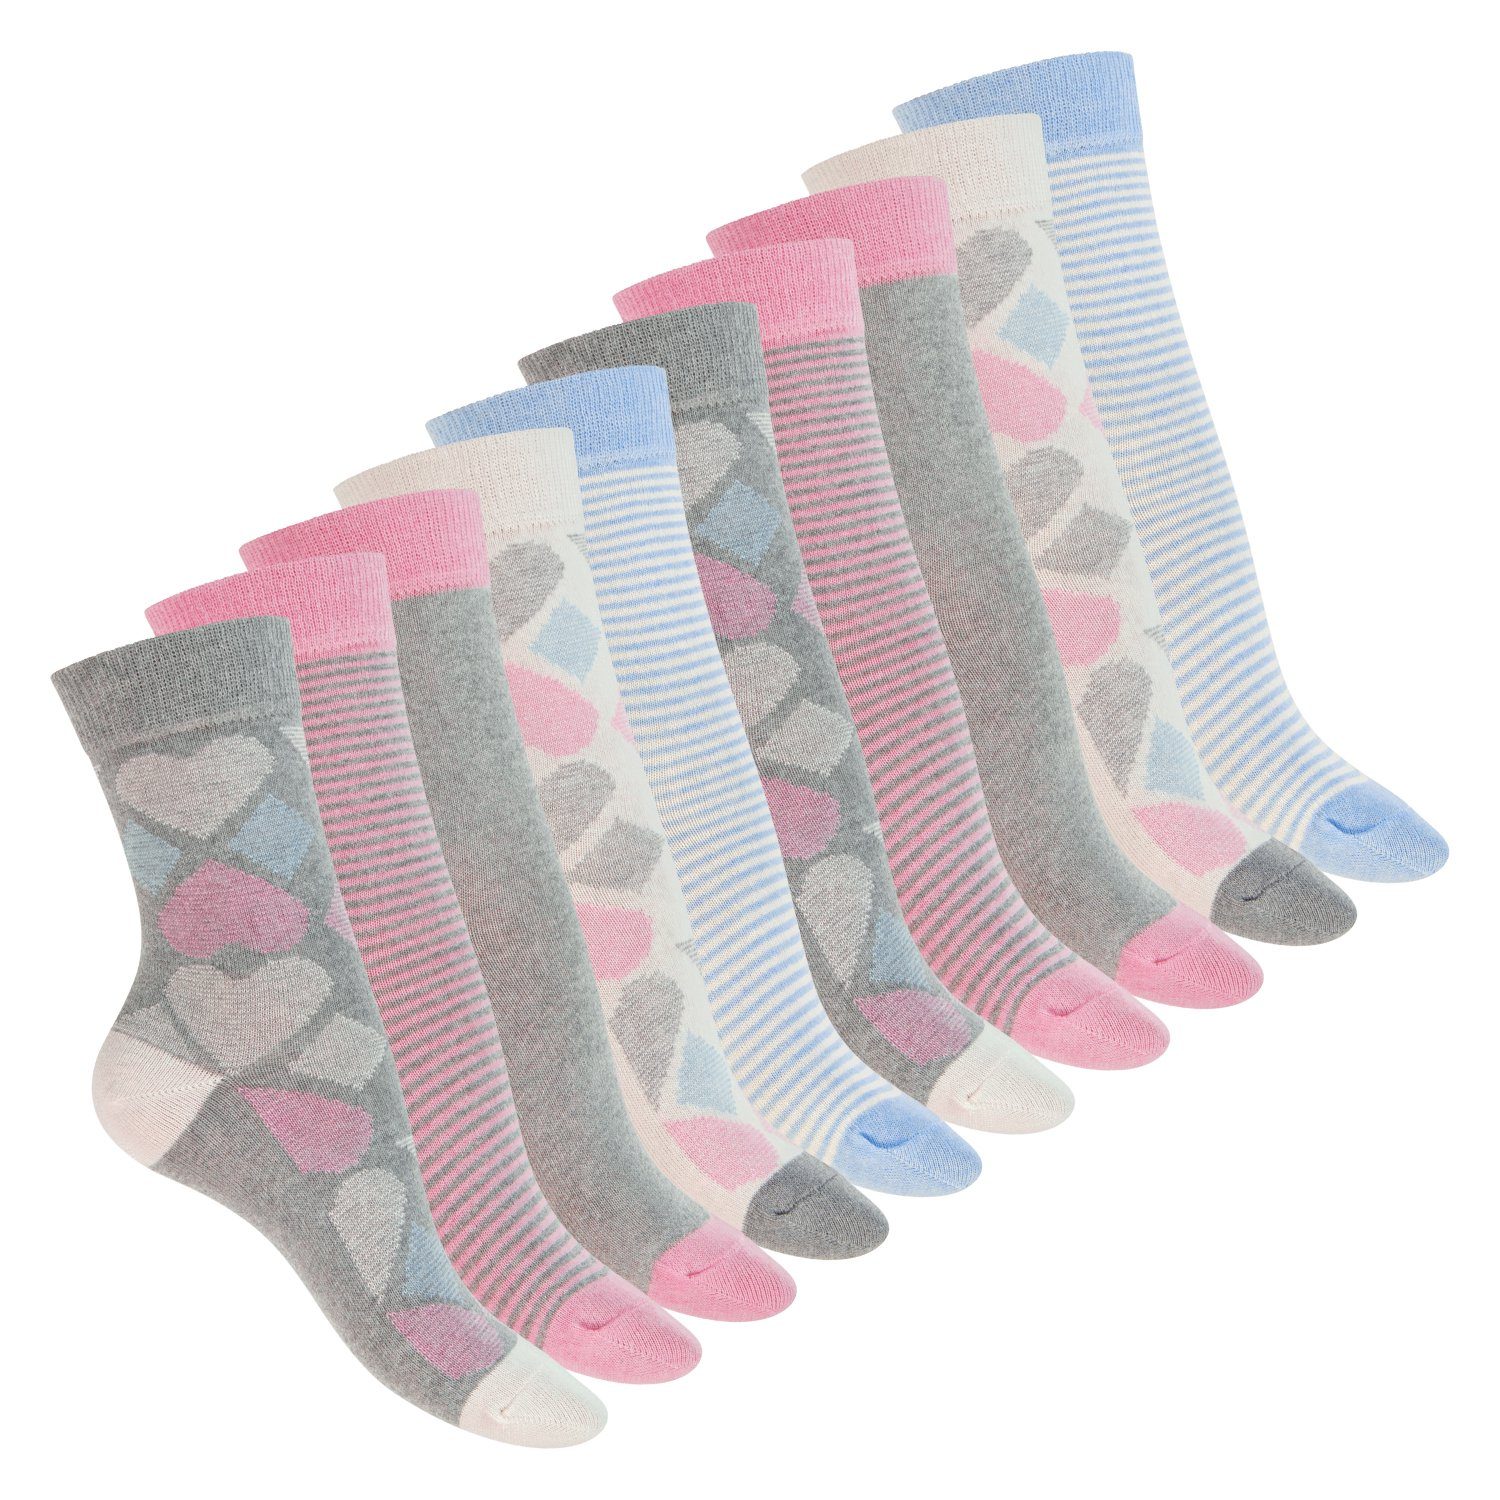 Damen mit Baumwolle Socken Pink (10 Paar), Basicsocken Carnation regenerative Motiv Eco celodoro Süße